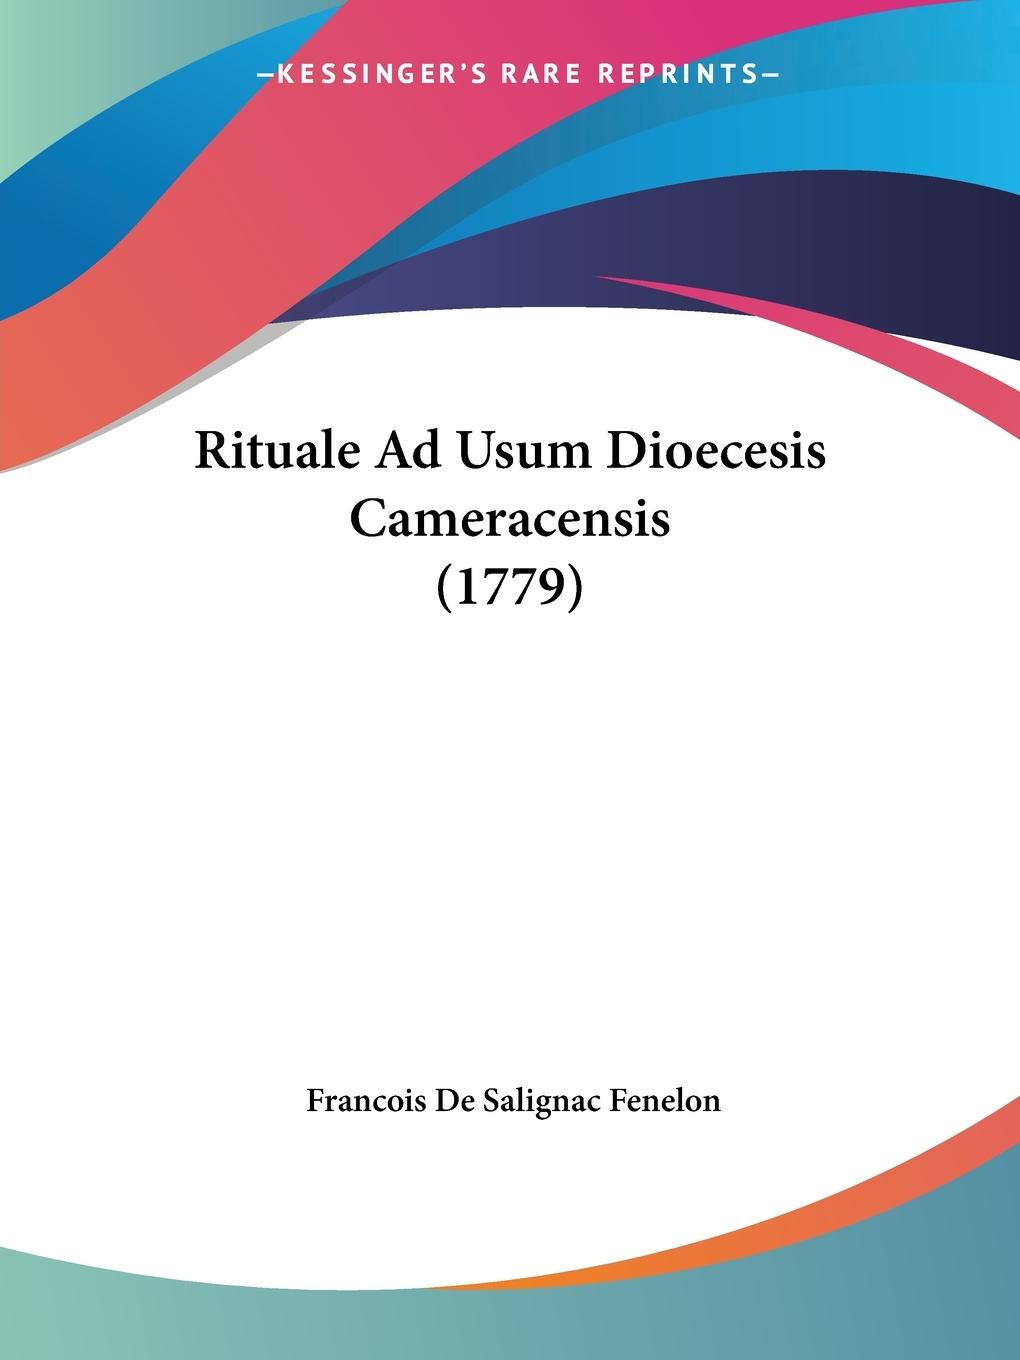 Rituale Ad Usum Dioecesis Cameracensis (1779) - Fenelon, Francois De Salignac